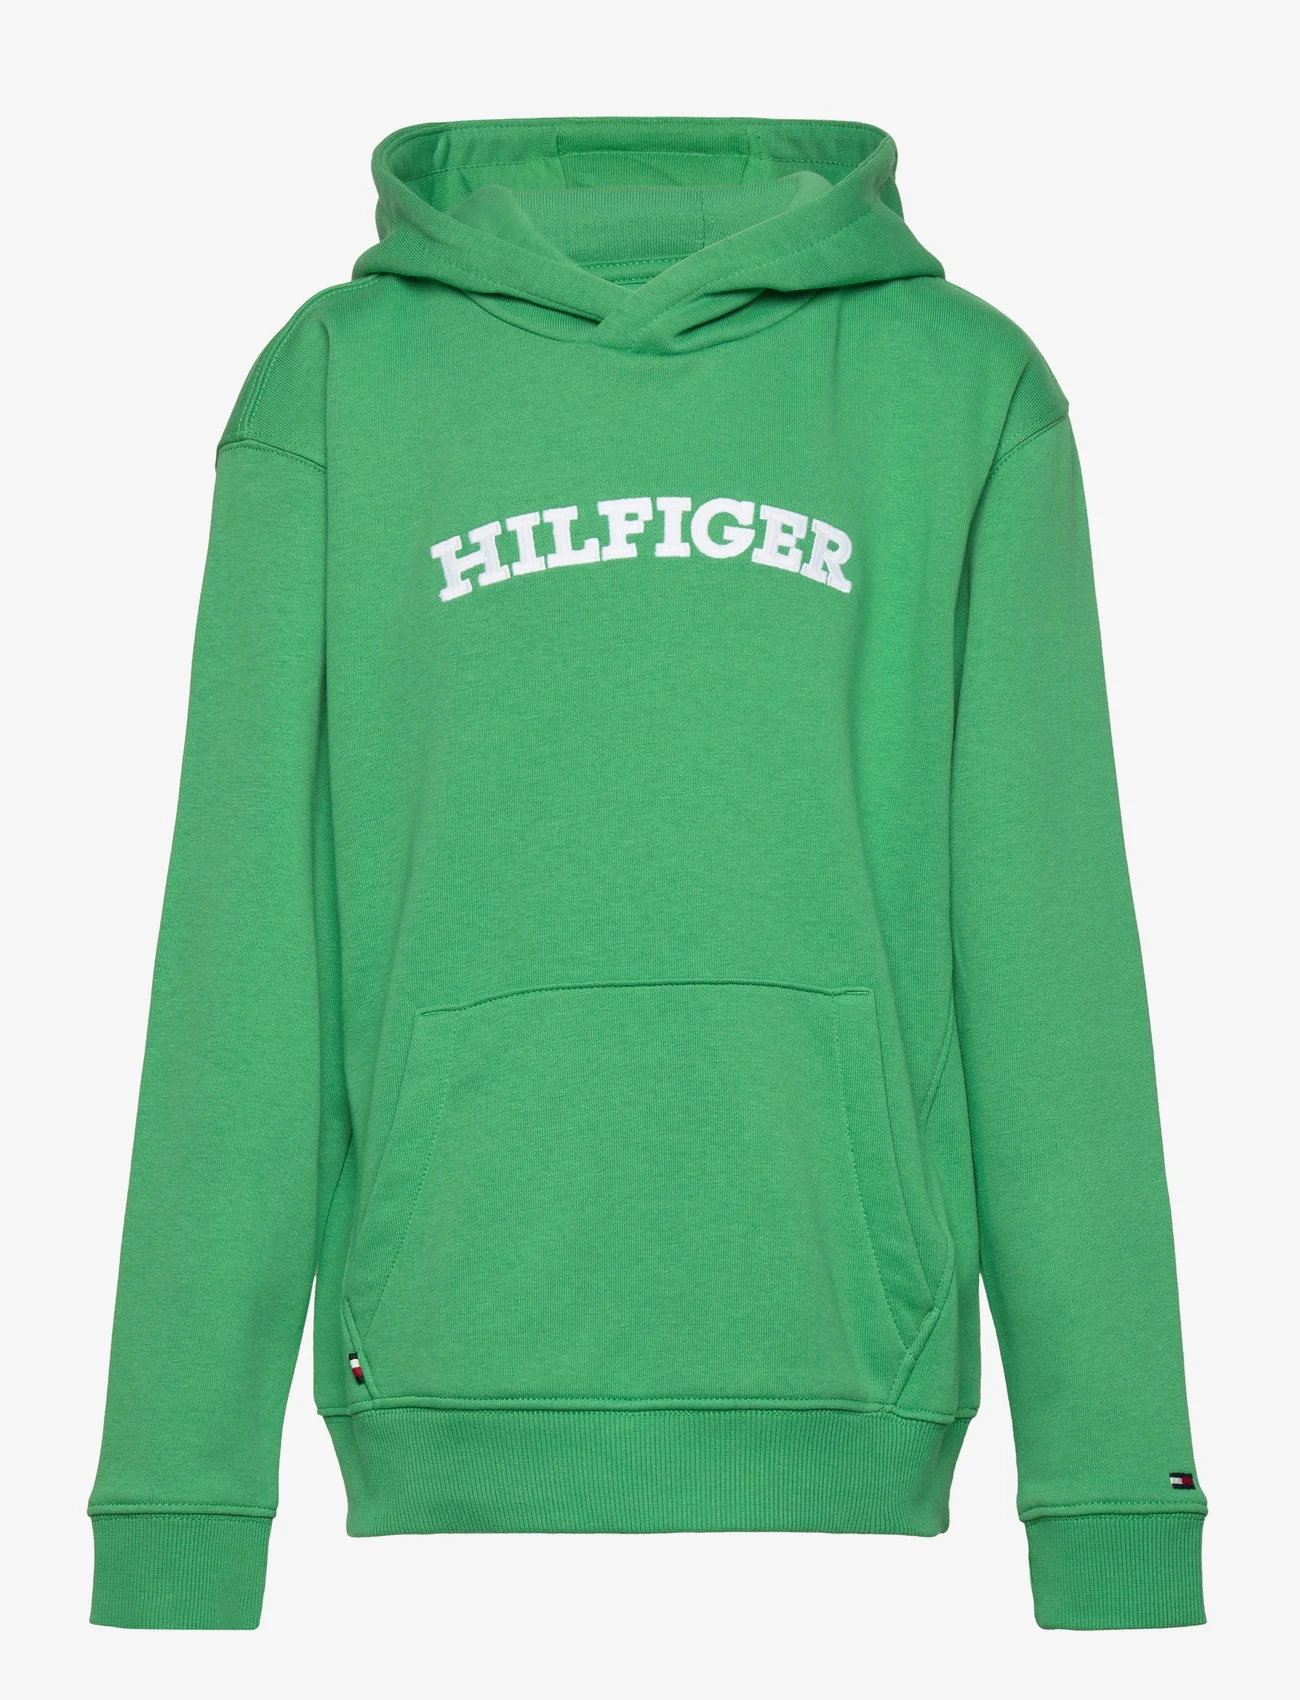 Tommy Hilfiger - HILFIGER ARCHED HOODIE - hoodies - coastal green - 0